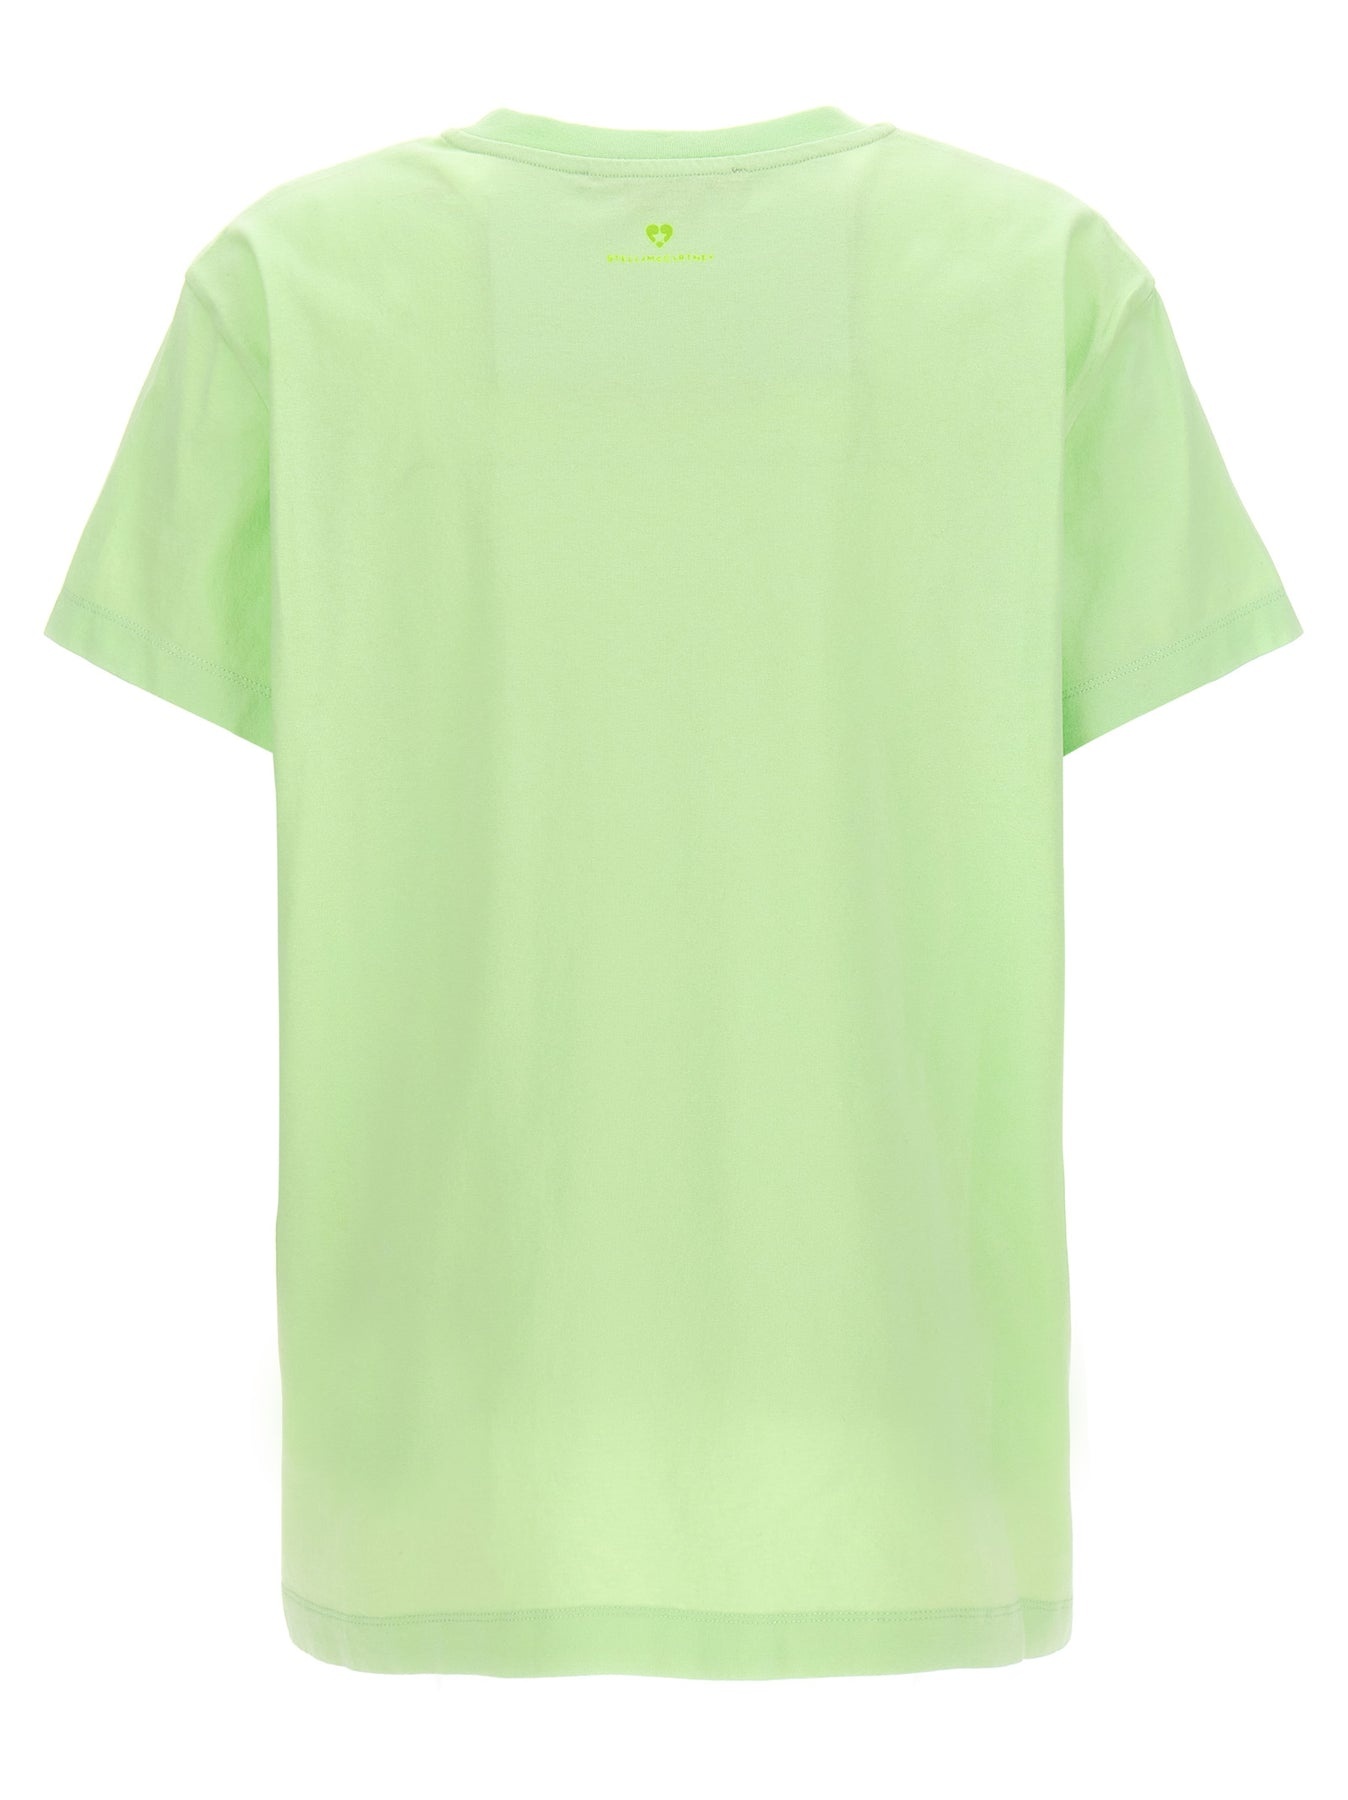 Iconic Mini Heart T-Shirt Green - 2